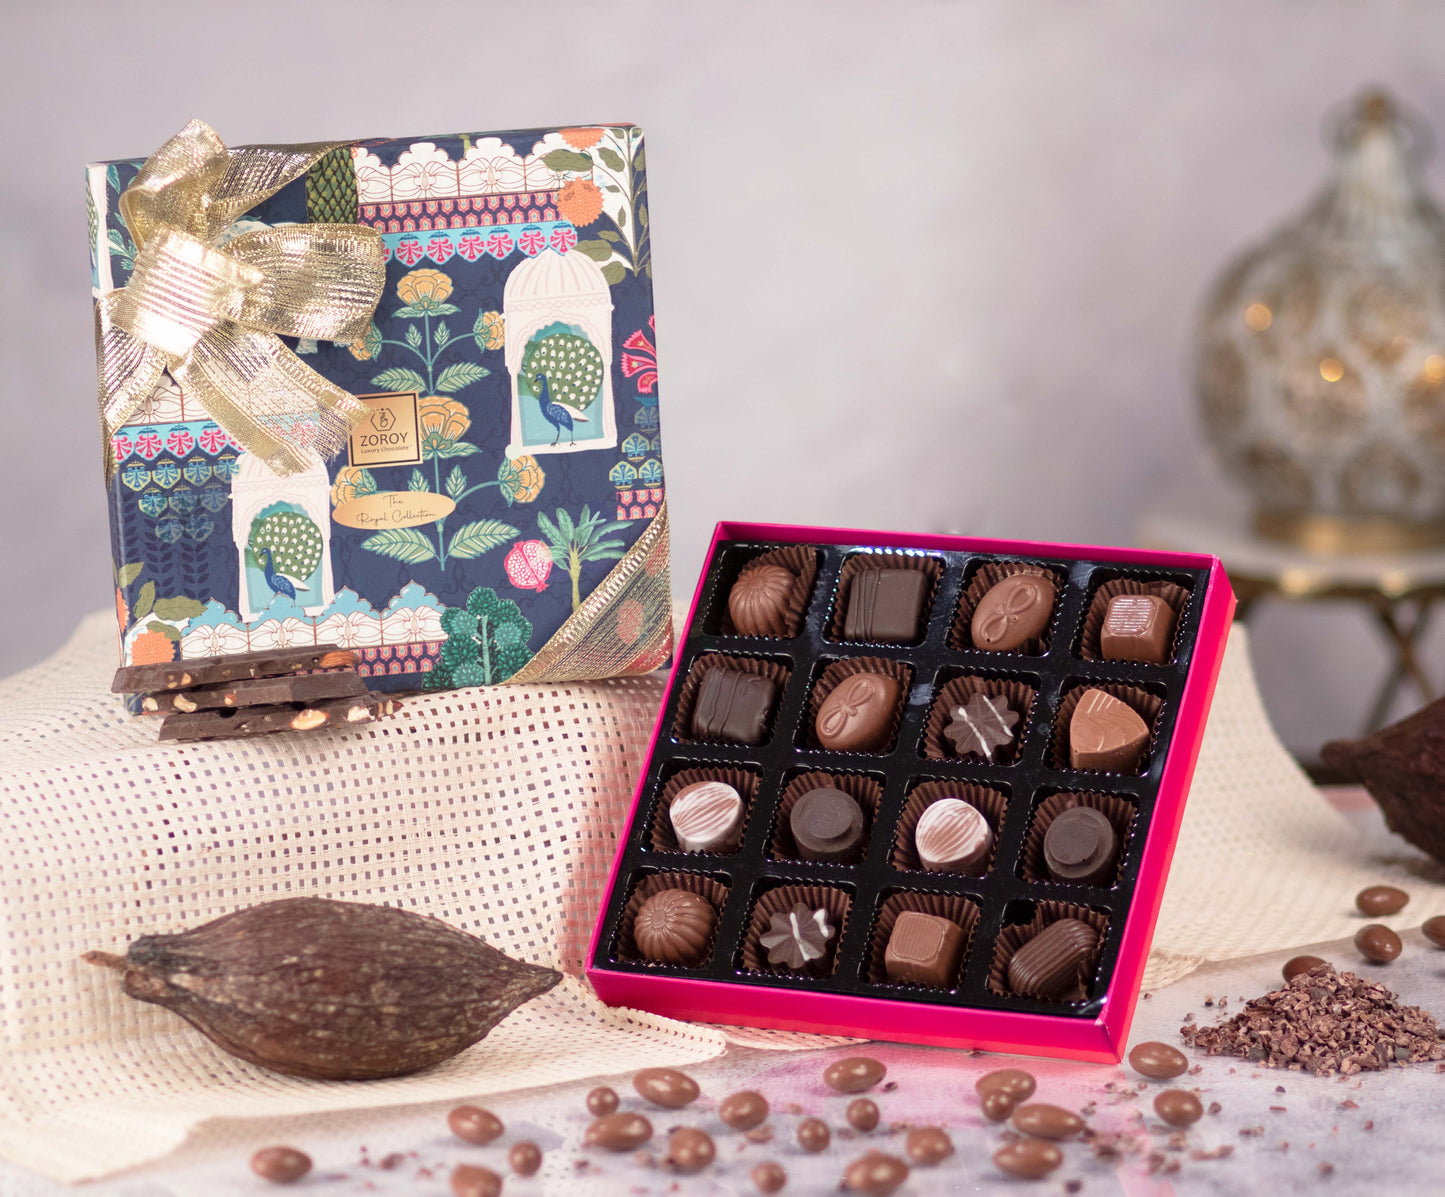 ZOROY Diwali special gift box of 16 assorted chocolates